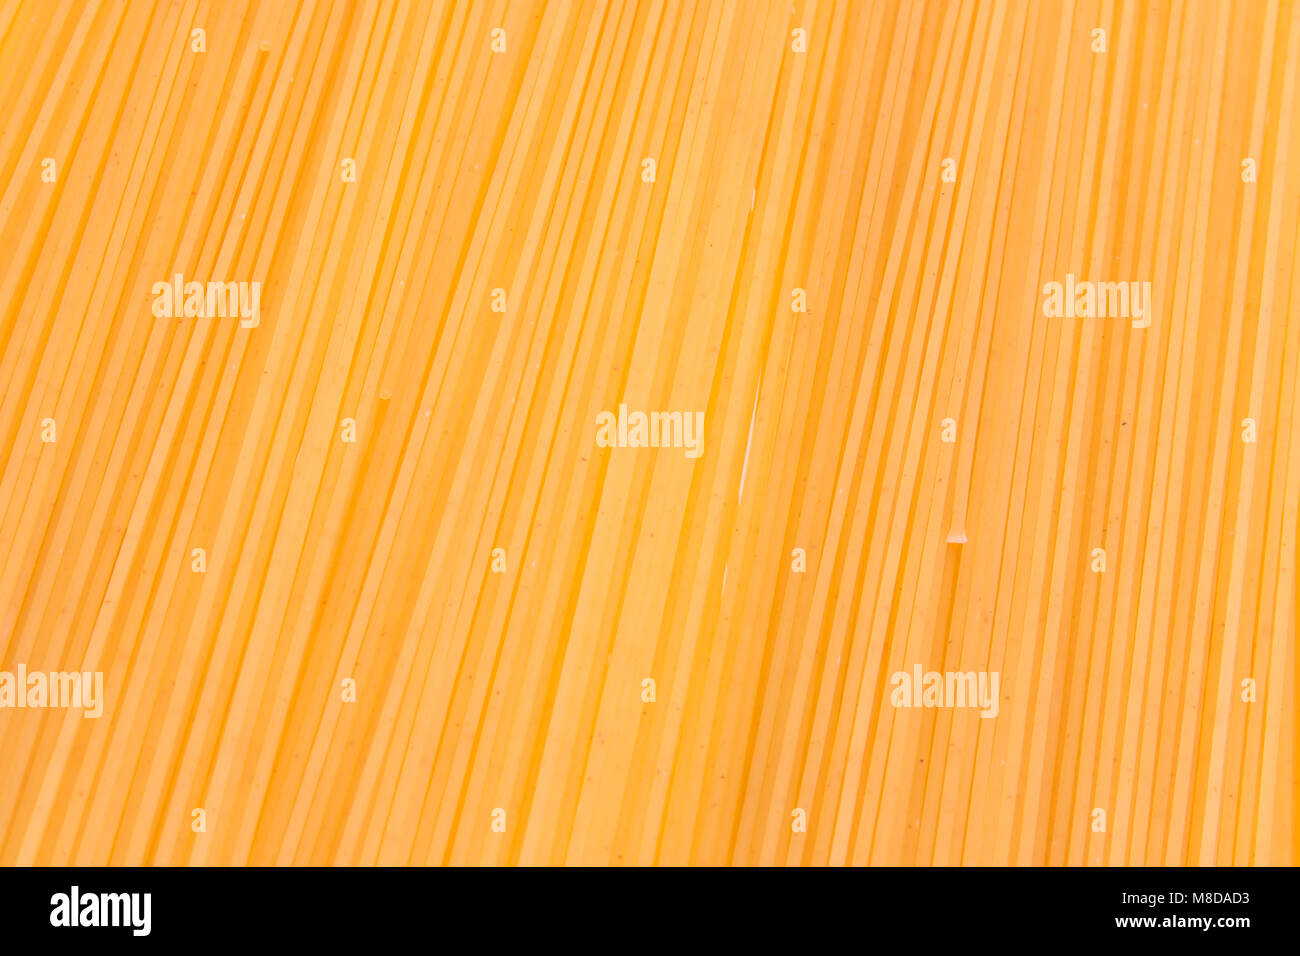 Orange rohe spaghetti Linie Hintergrund, Stockfoto